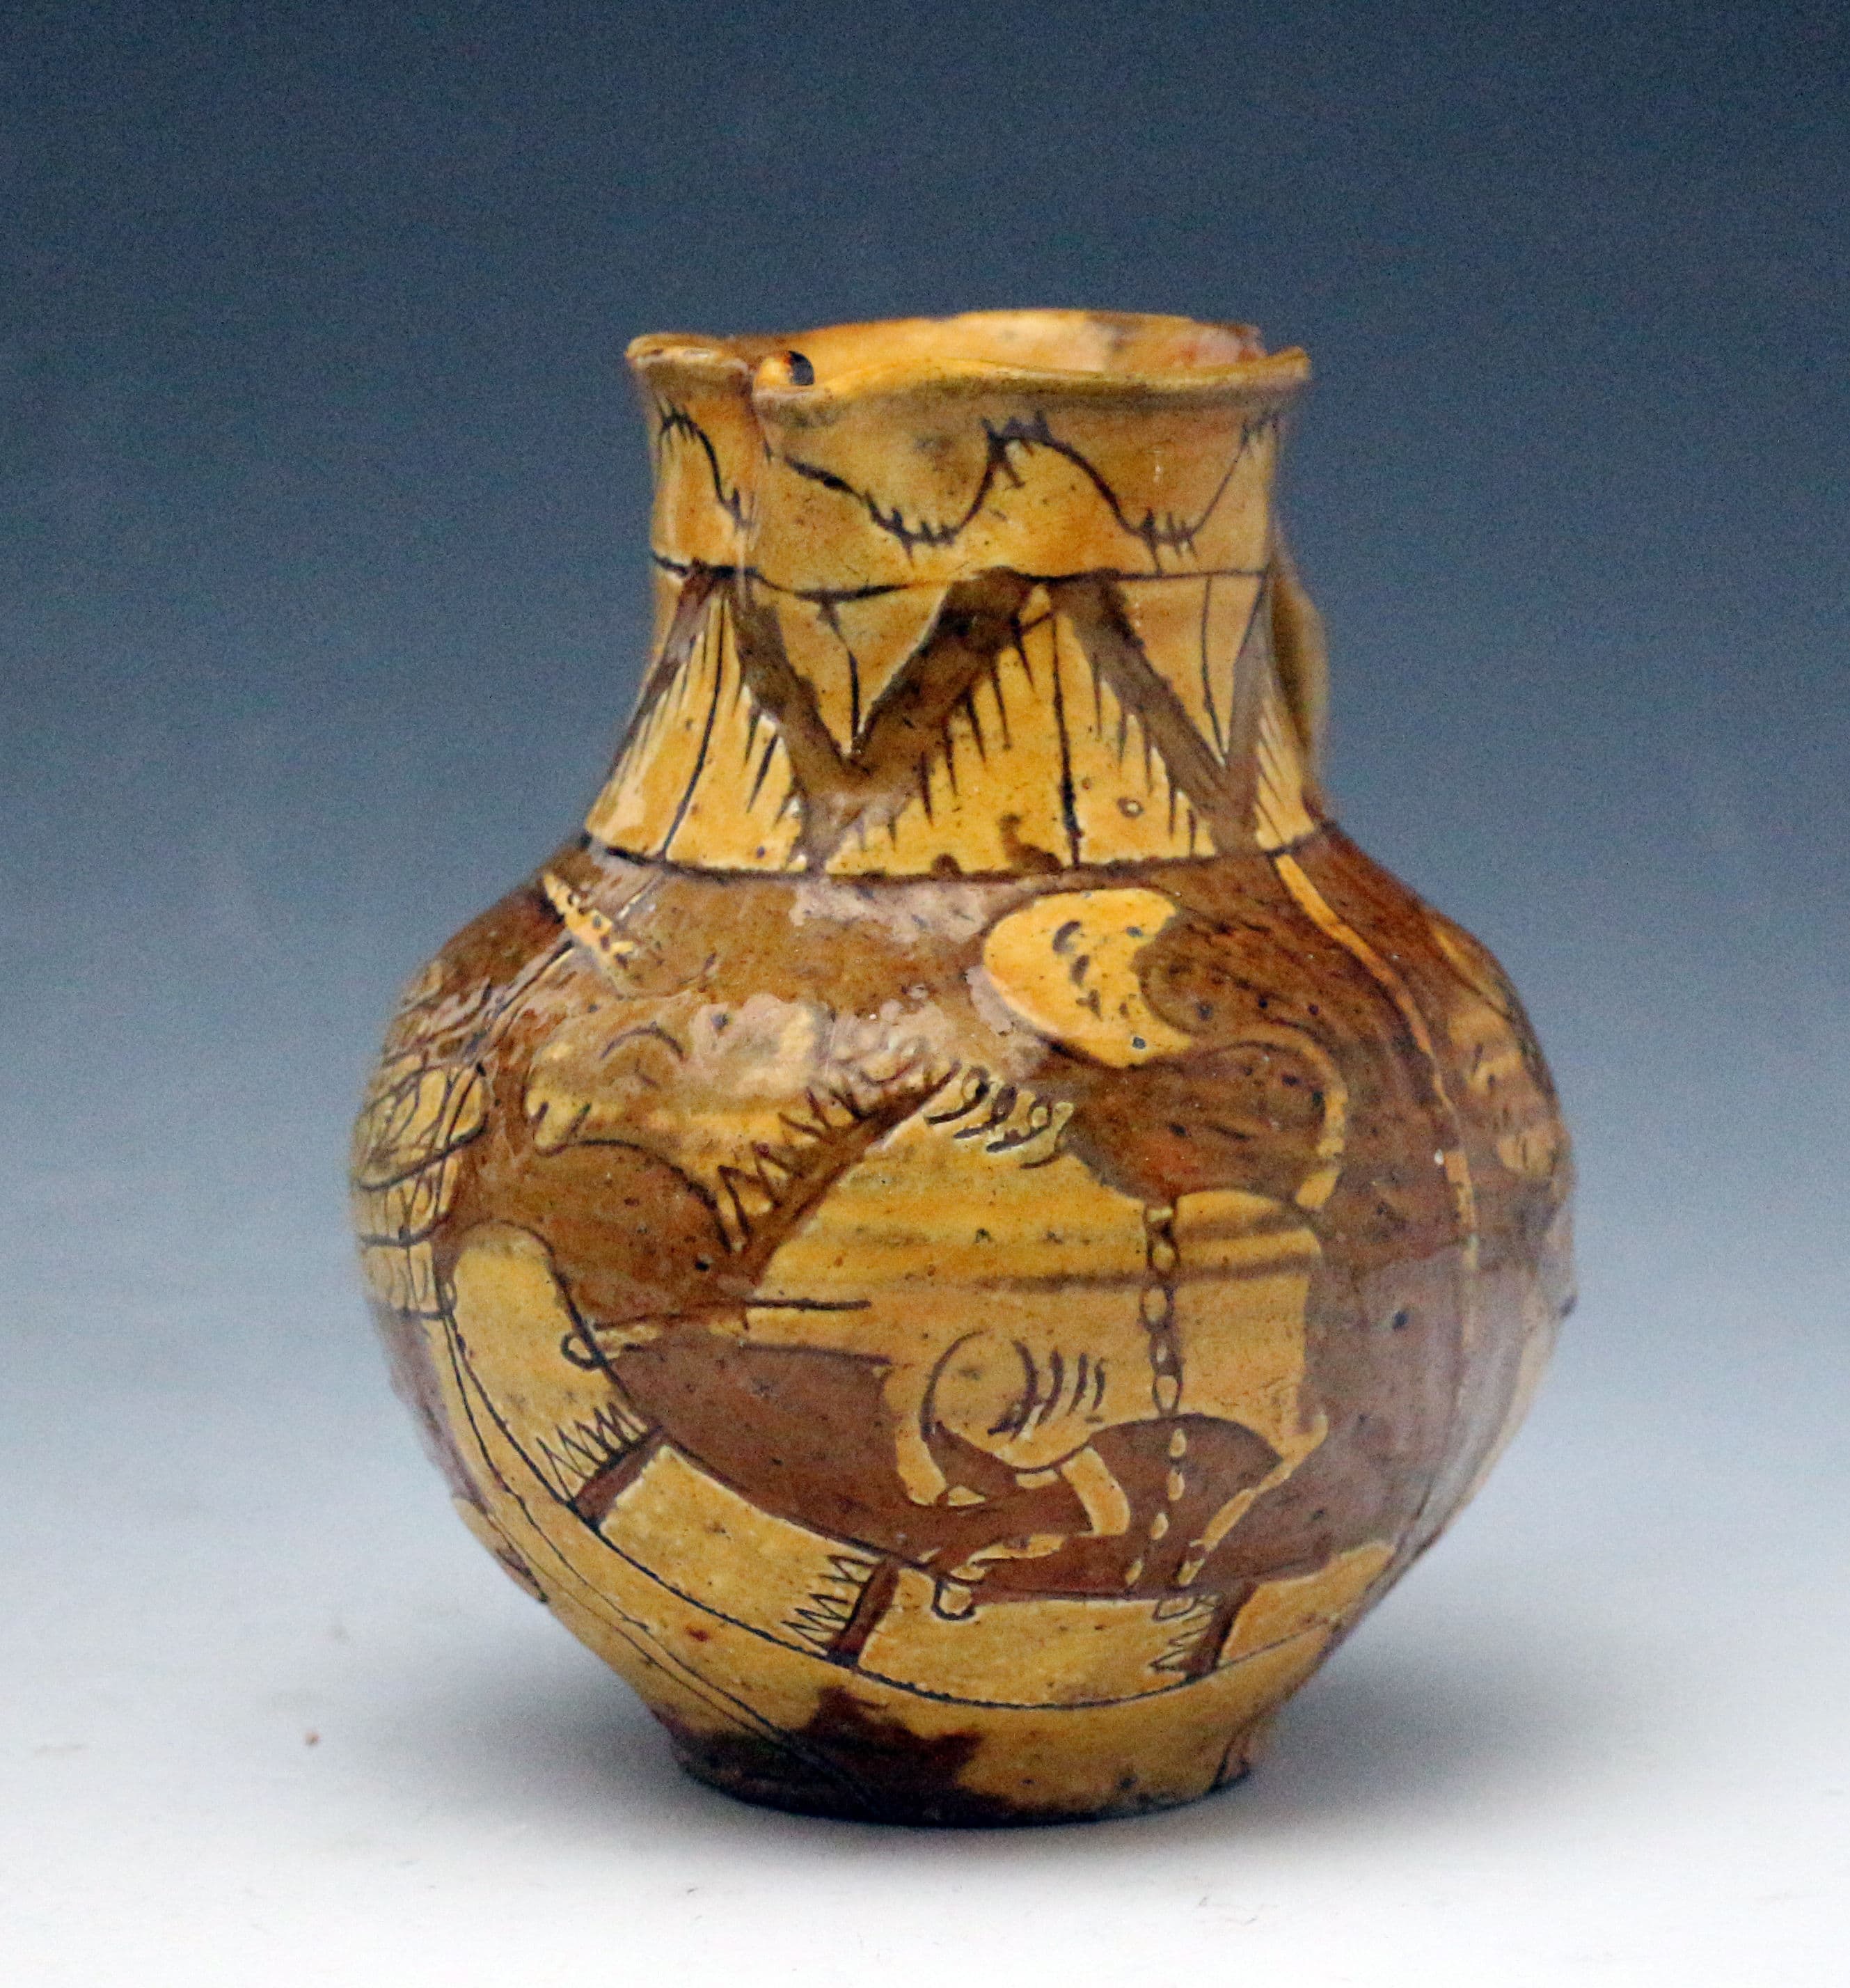 Devon pottery slipware jug with scraffito decoration of a bird and unicorn with inscription and